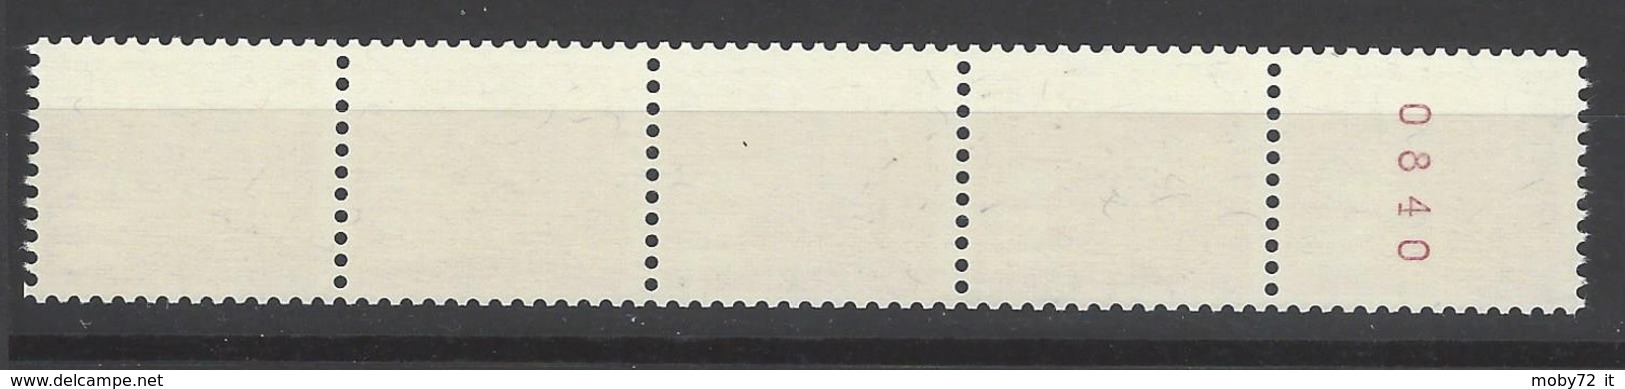 Svizzera - 1970 - Usato/used - Rollenmarken - Mi N. 933 - Rollen